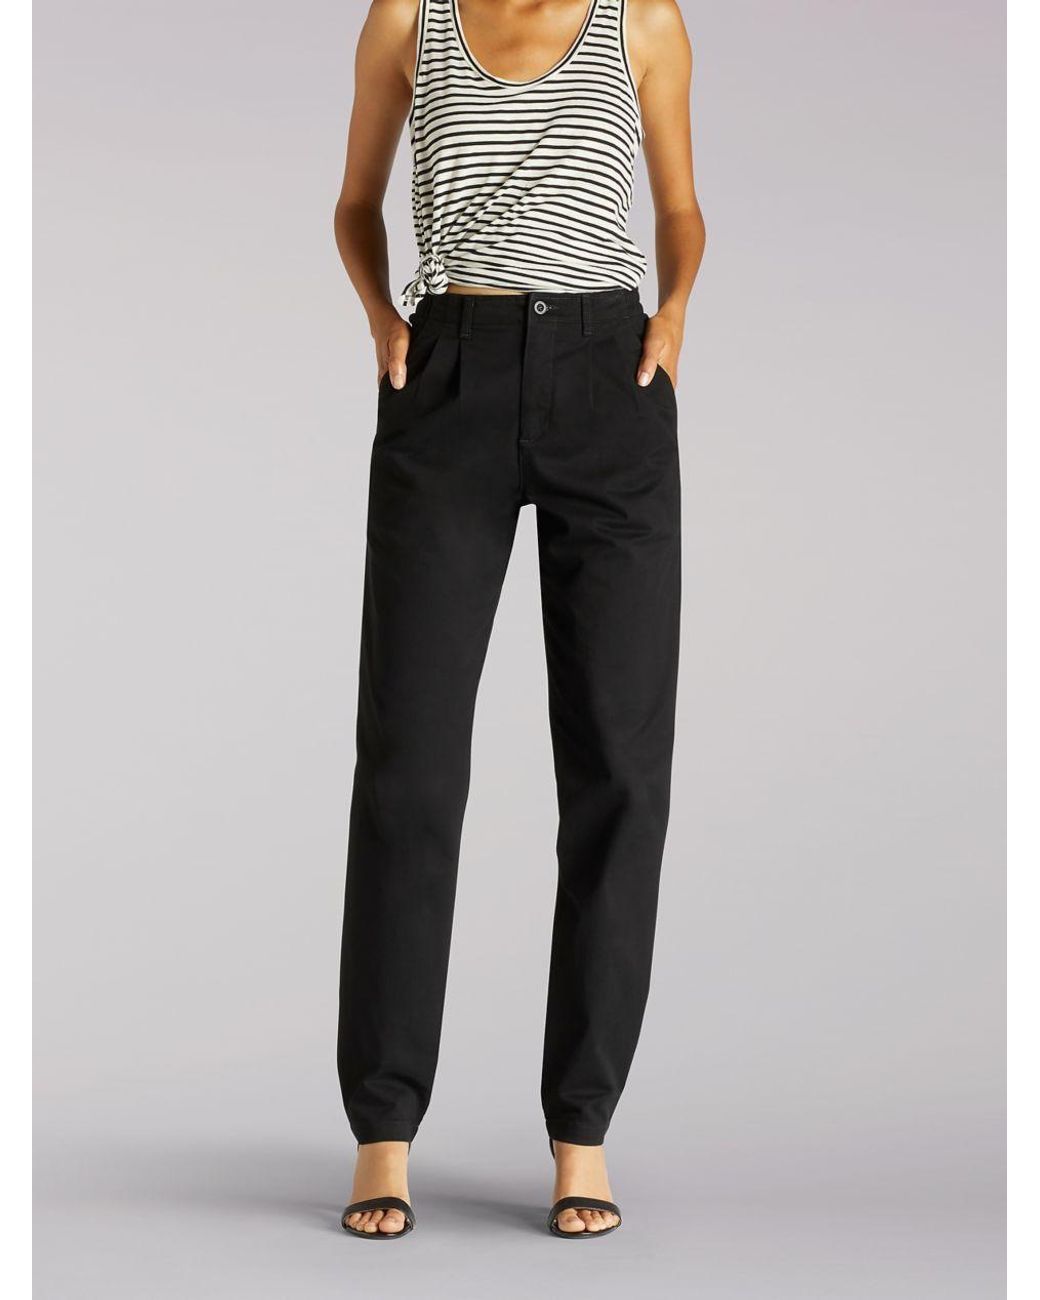 Lee Jeans Cotton Side Elastic Pants in Black - Lyst